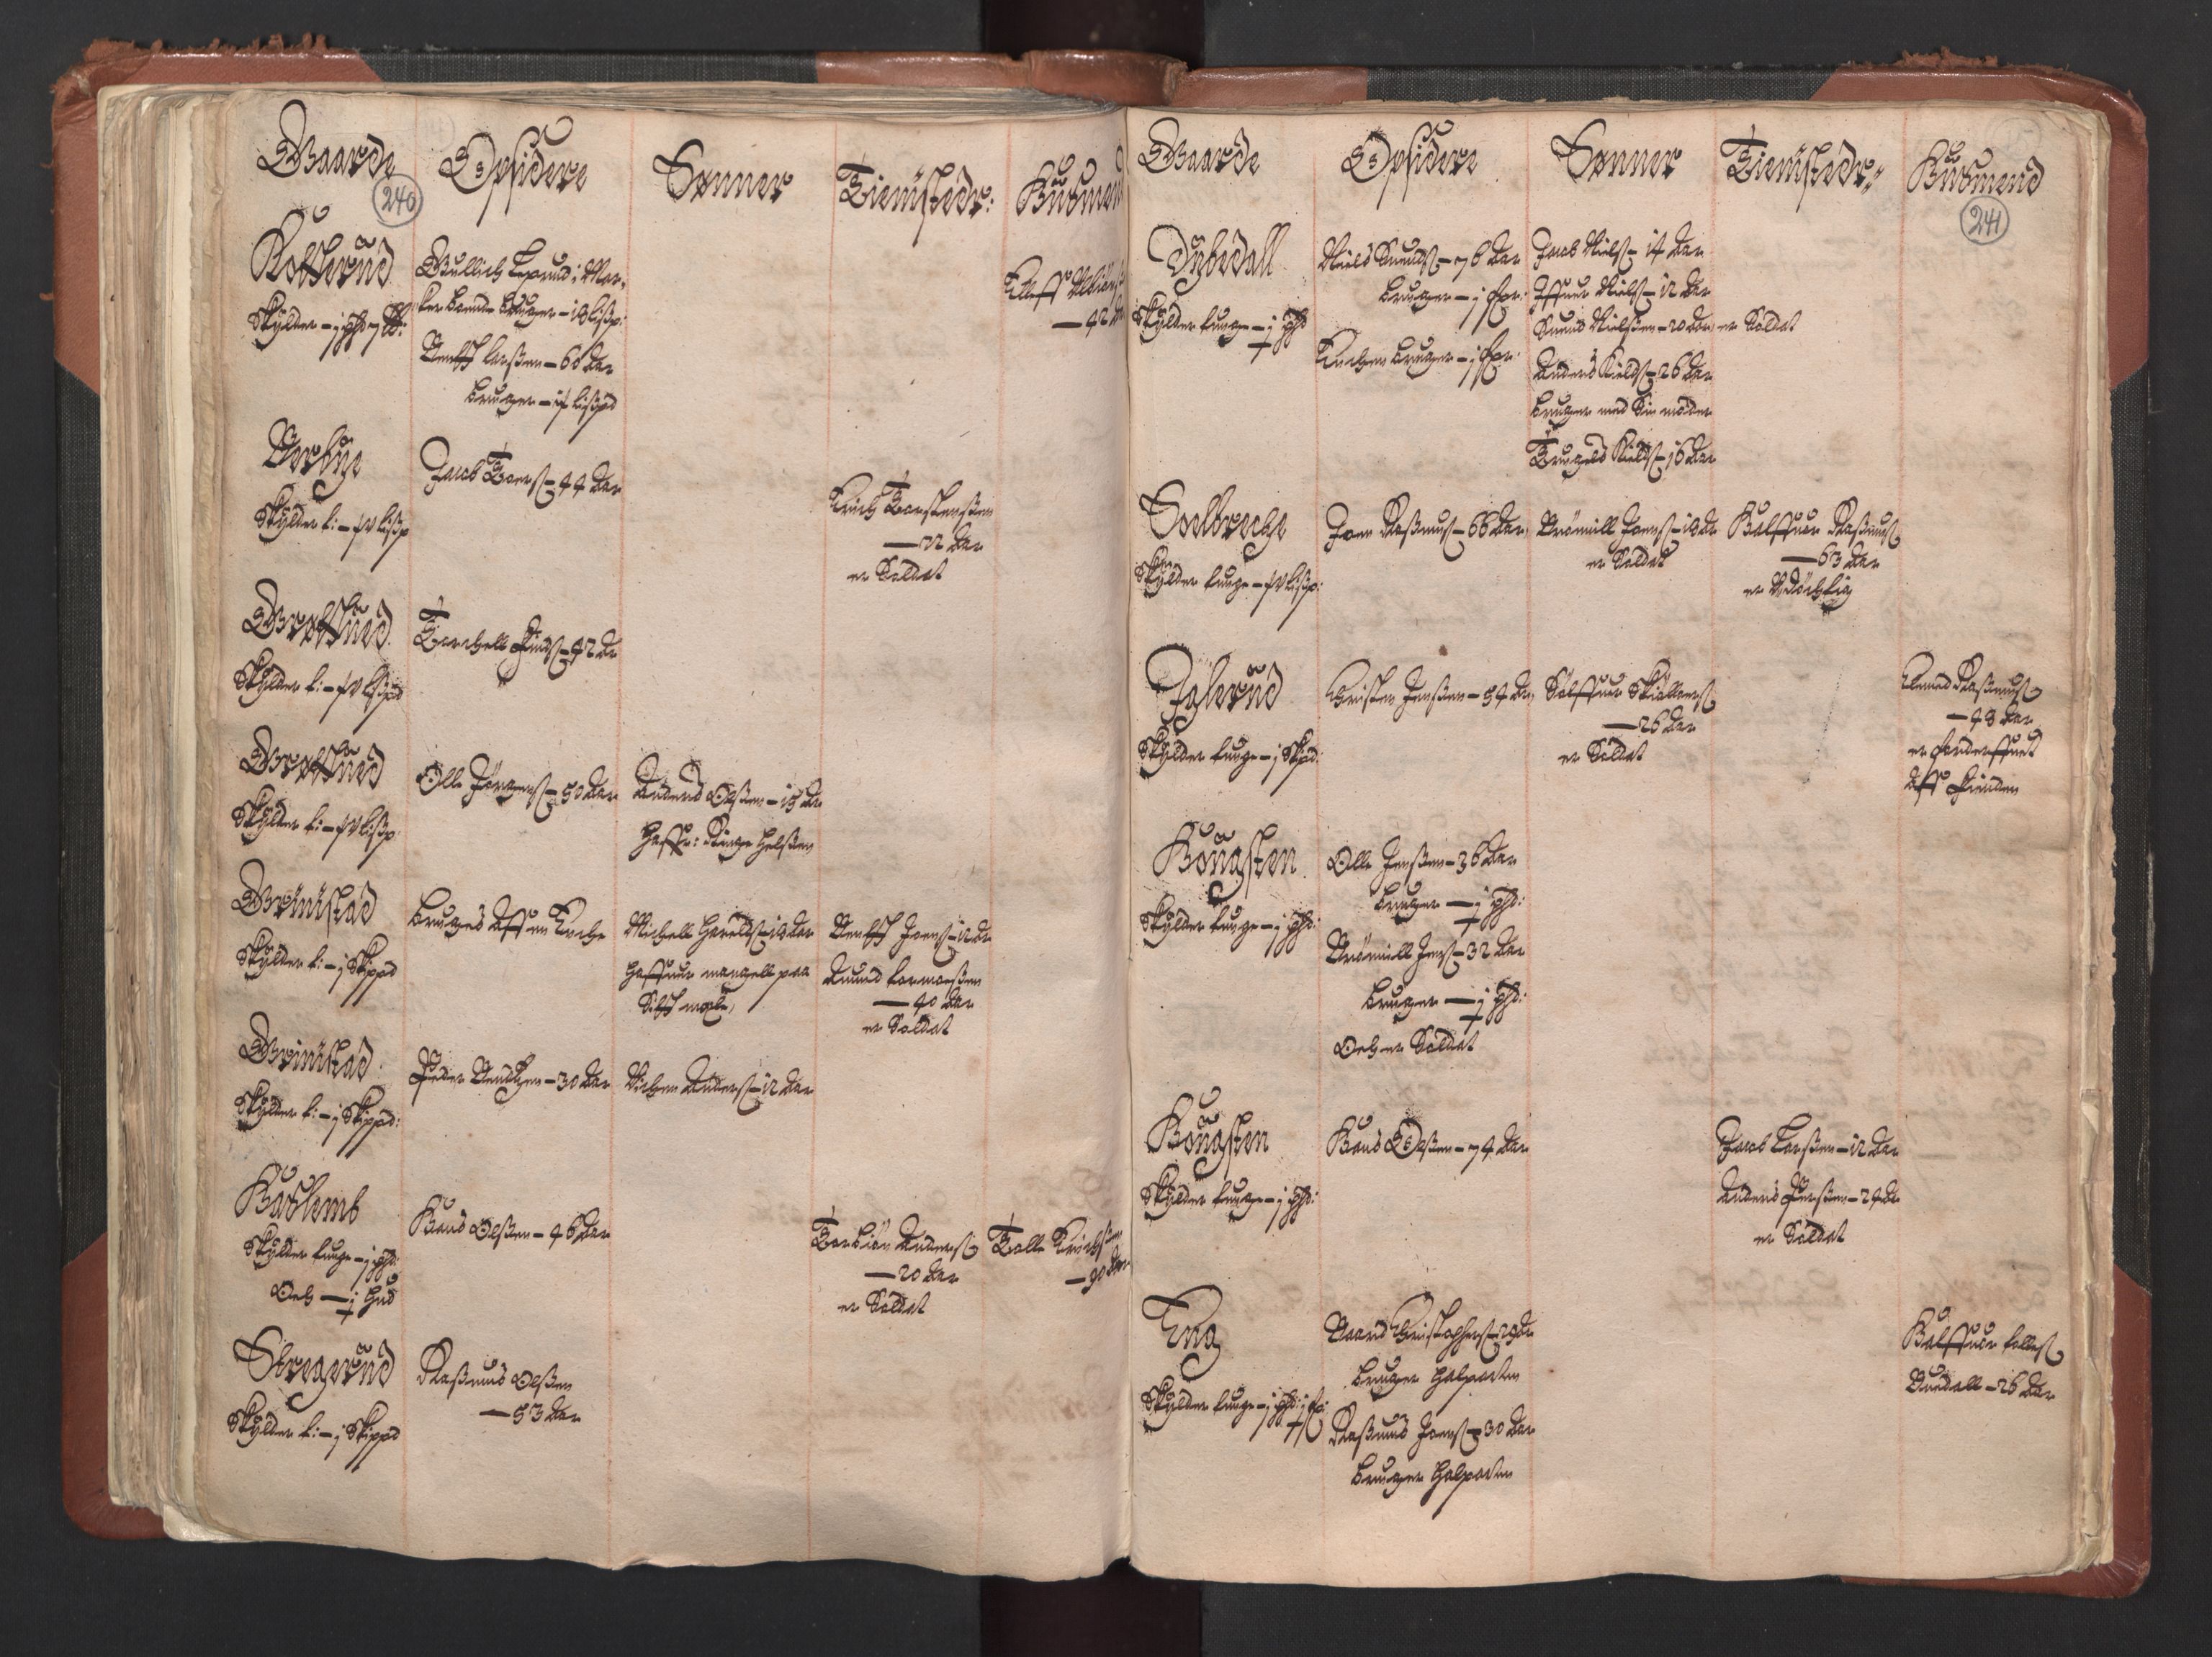 RA, Fogdenes og sorenskrivernes manntall 1664-1666, nr. 1: Fogderier (len og skipreider) i nåværende Østfold fylke, 1664, s. 240-241